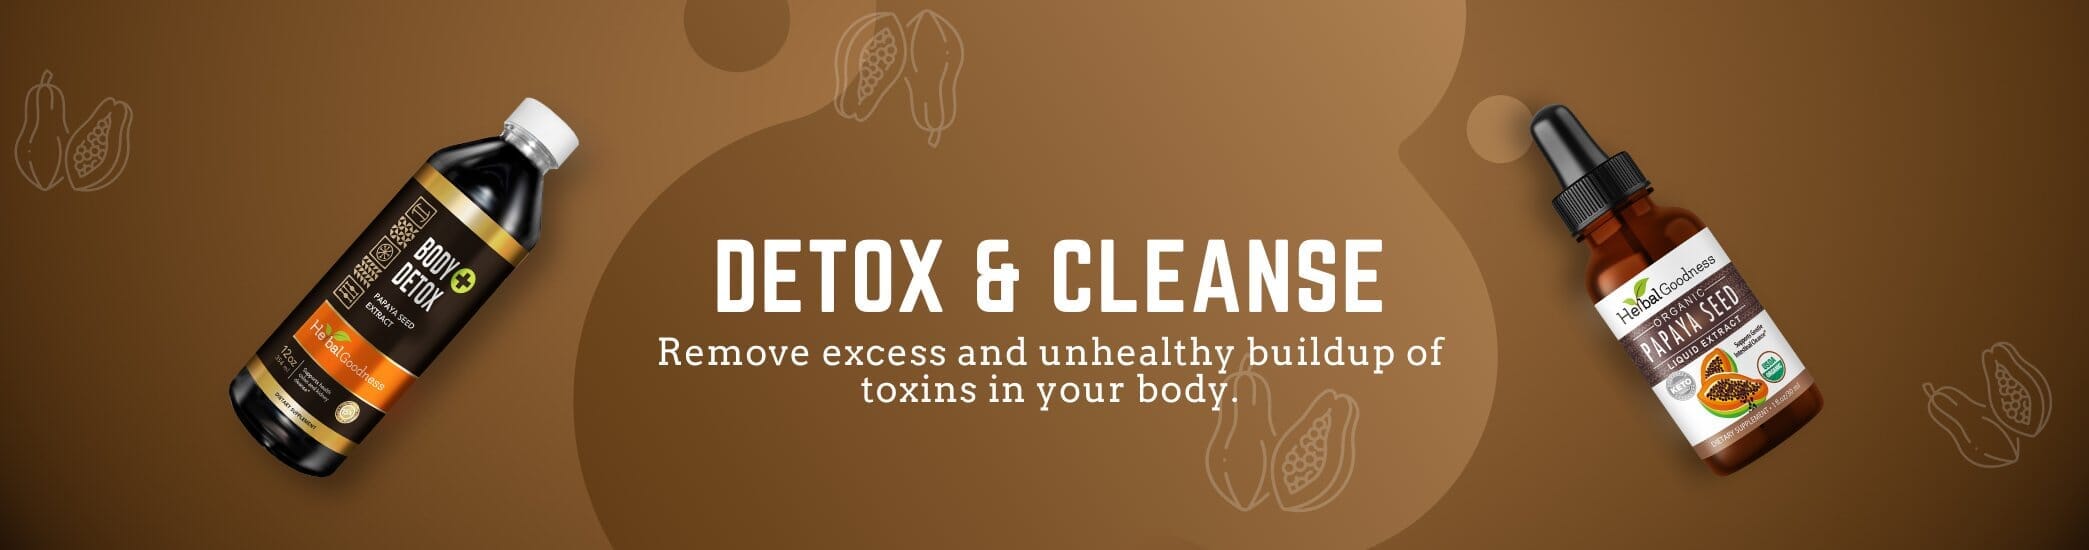 Detox & Cleanse - Gut, Kidney, Liver +